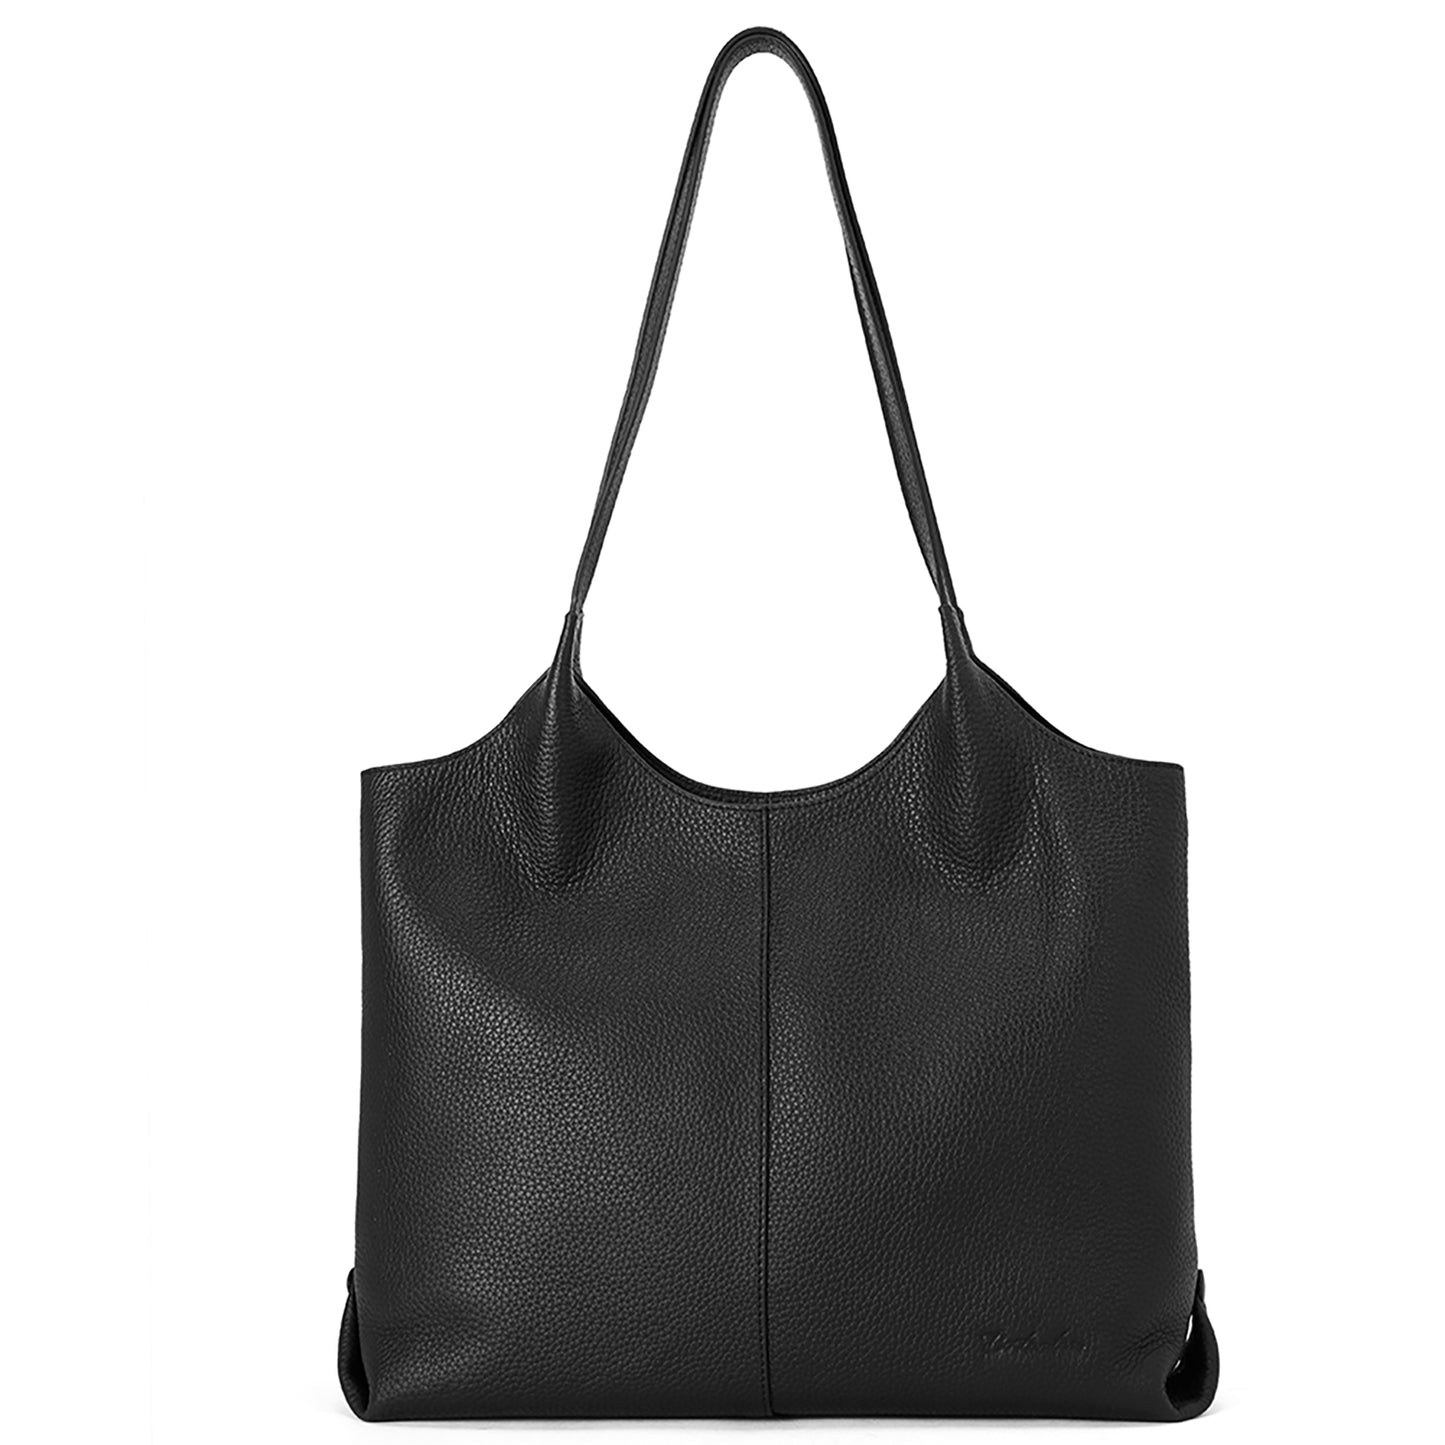 BOSTANTEN Women Handbags Designer Shoulder Tote Bag Soft Genuine Leather Top-handle Purse